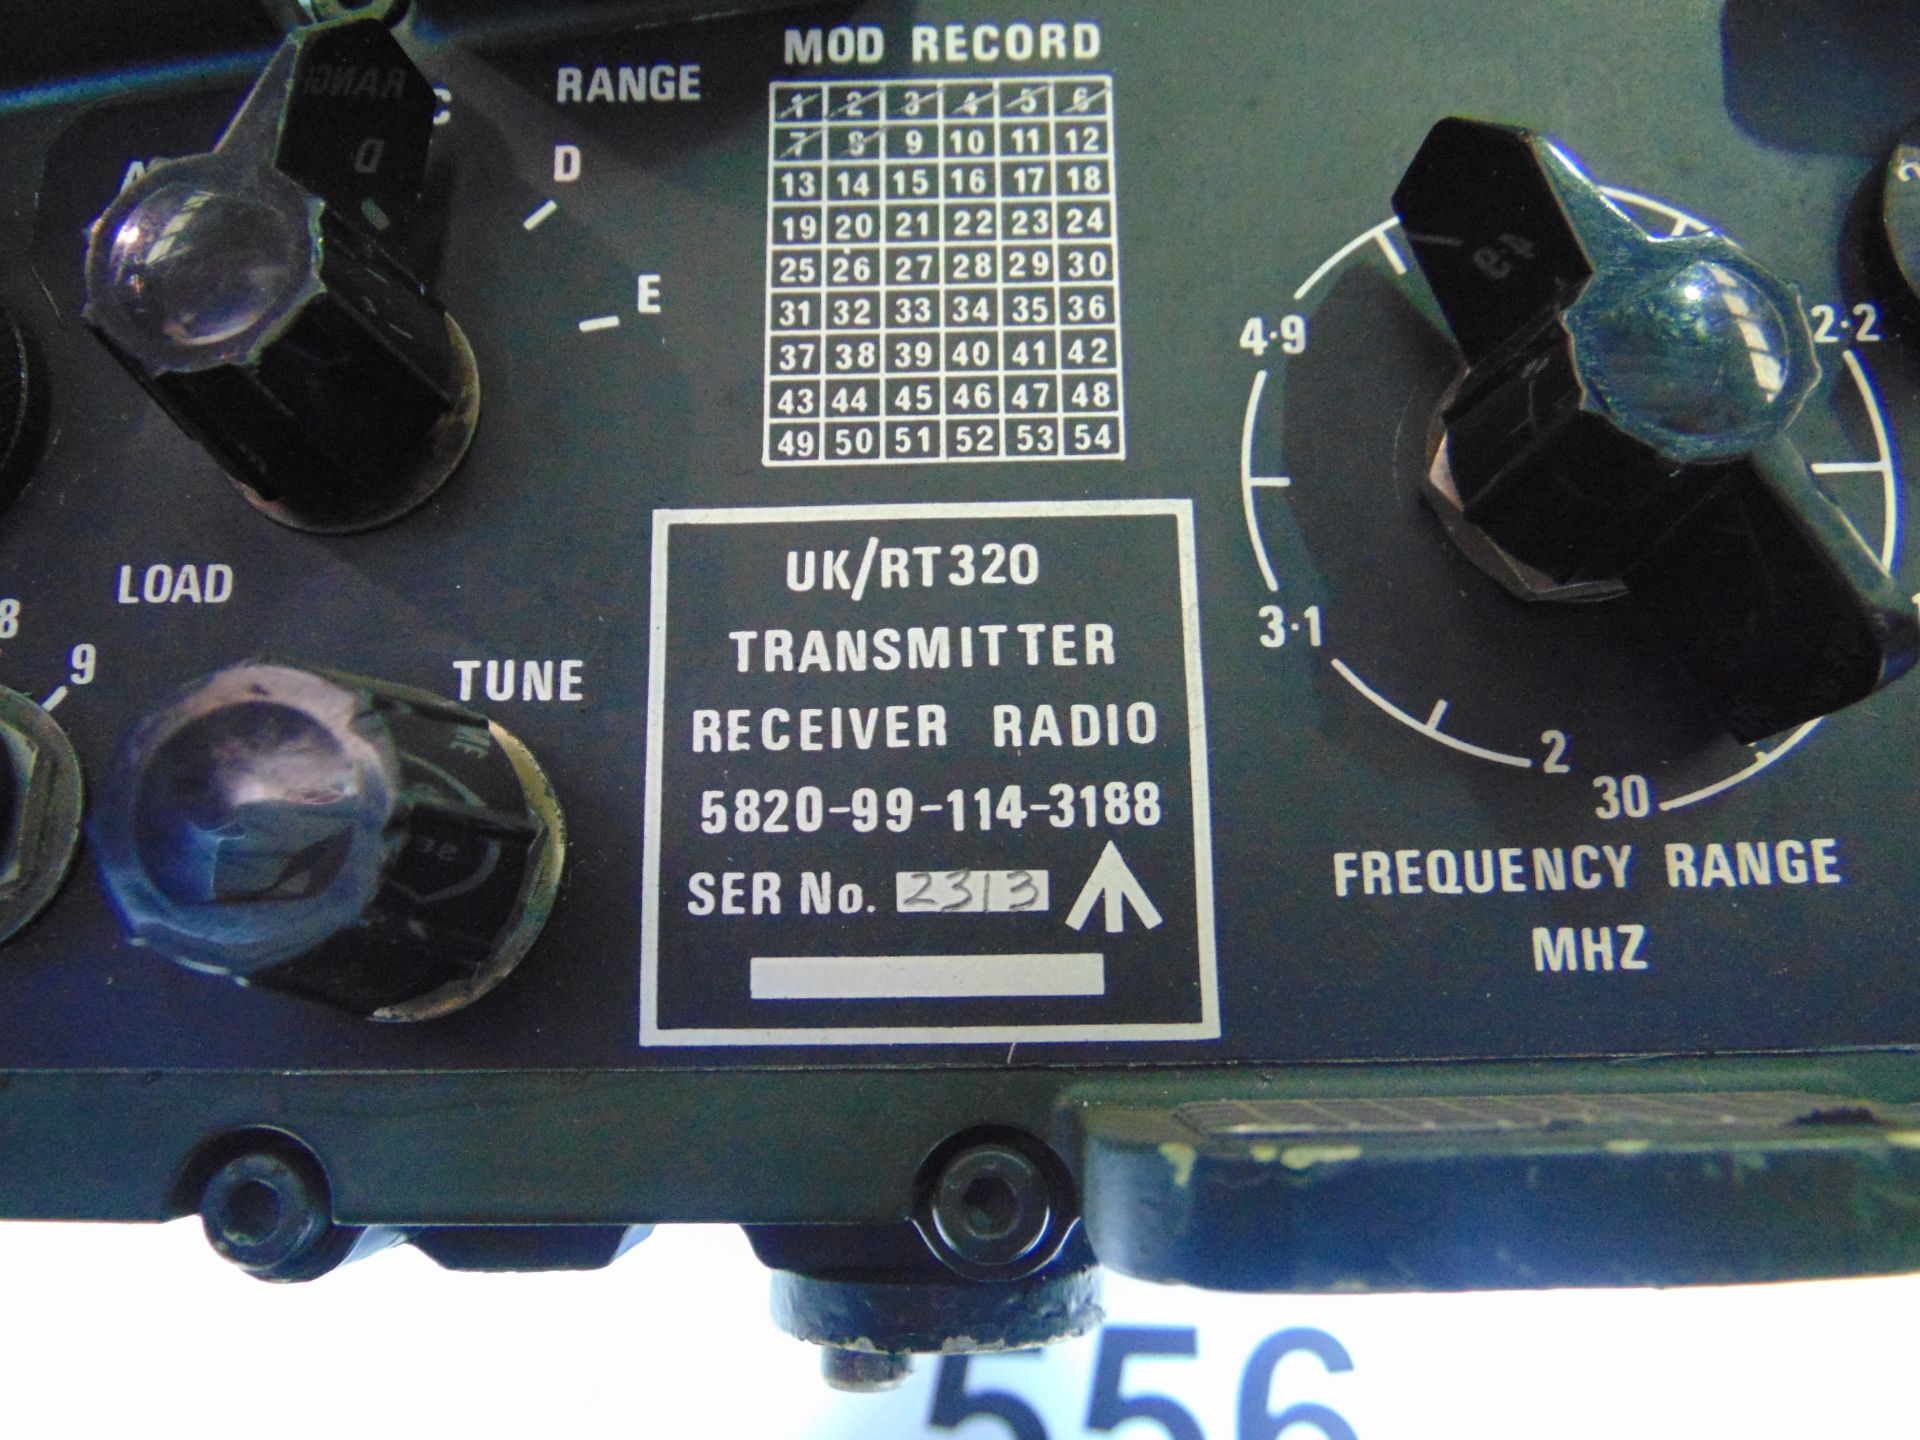 2X VERY NICE CLANSMAN UK RT 320 TRANSMITTER RECIEVER HF 2-30 MHz - Image 4 of 5